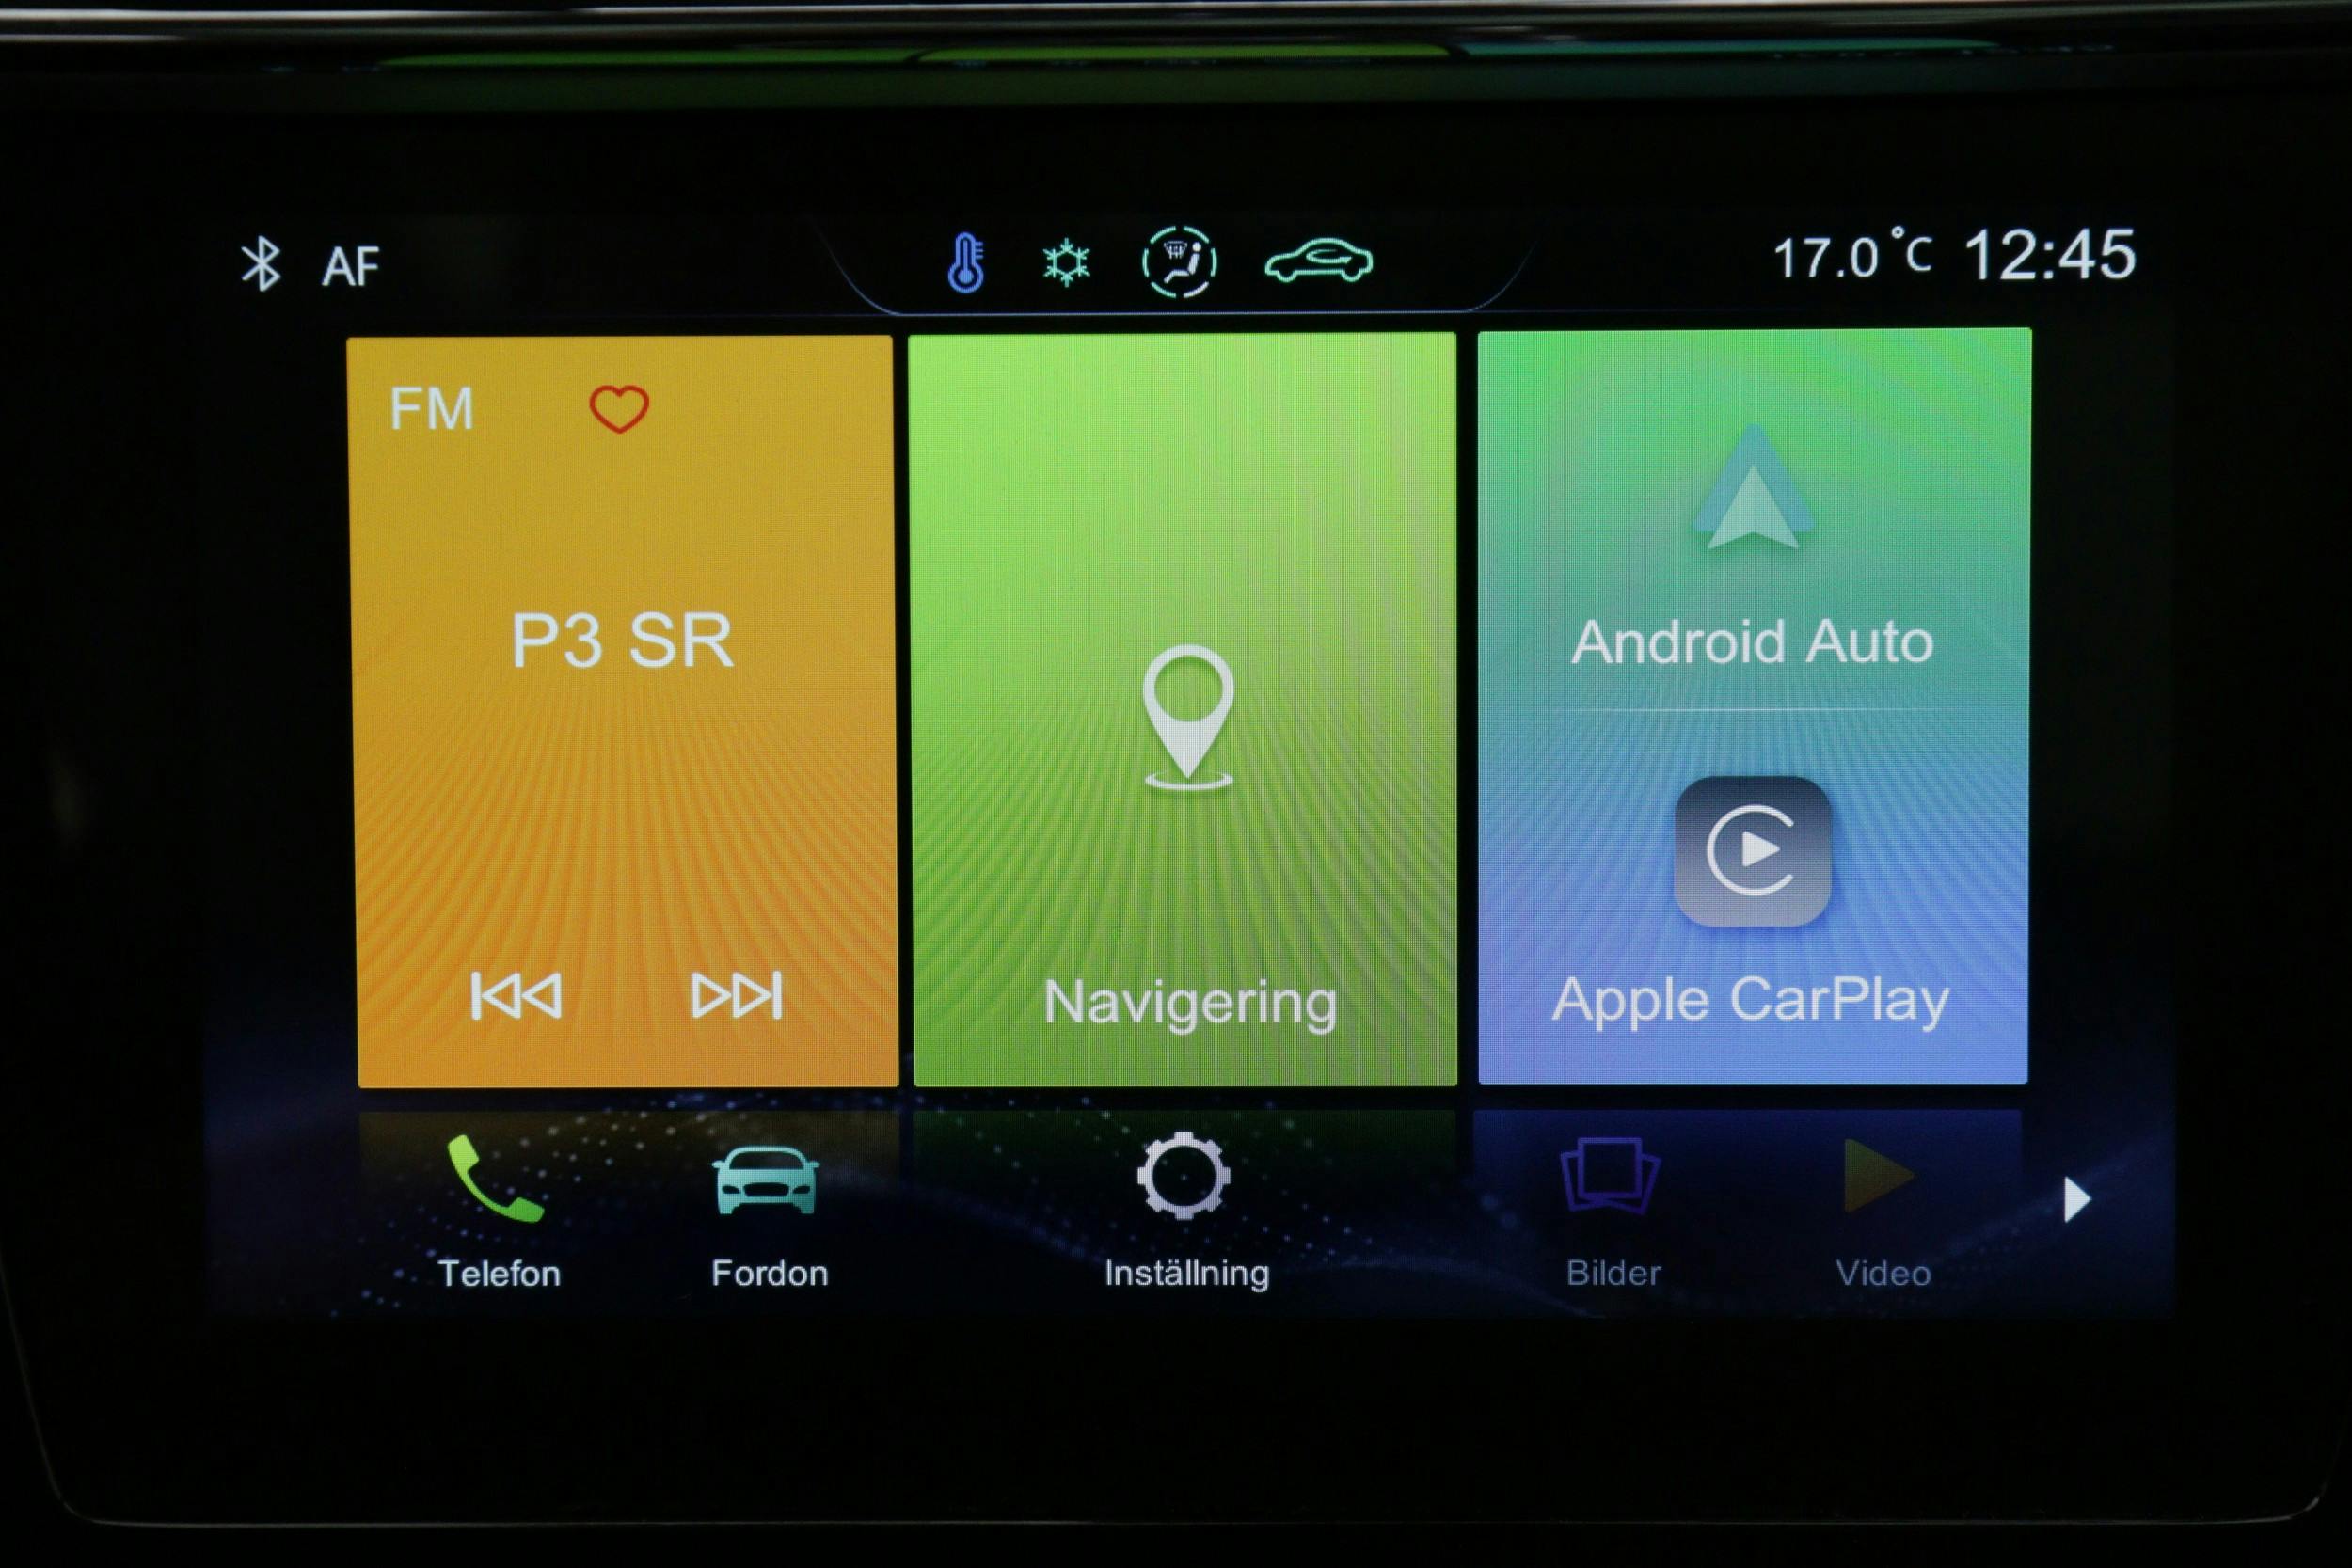 Infotainmentsystem: Apple CarPlay | Android Auto